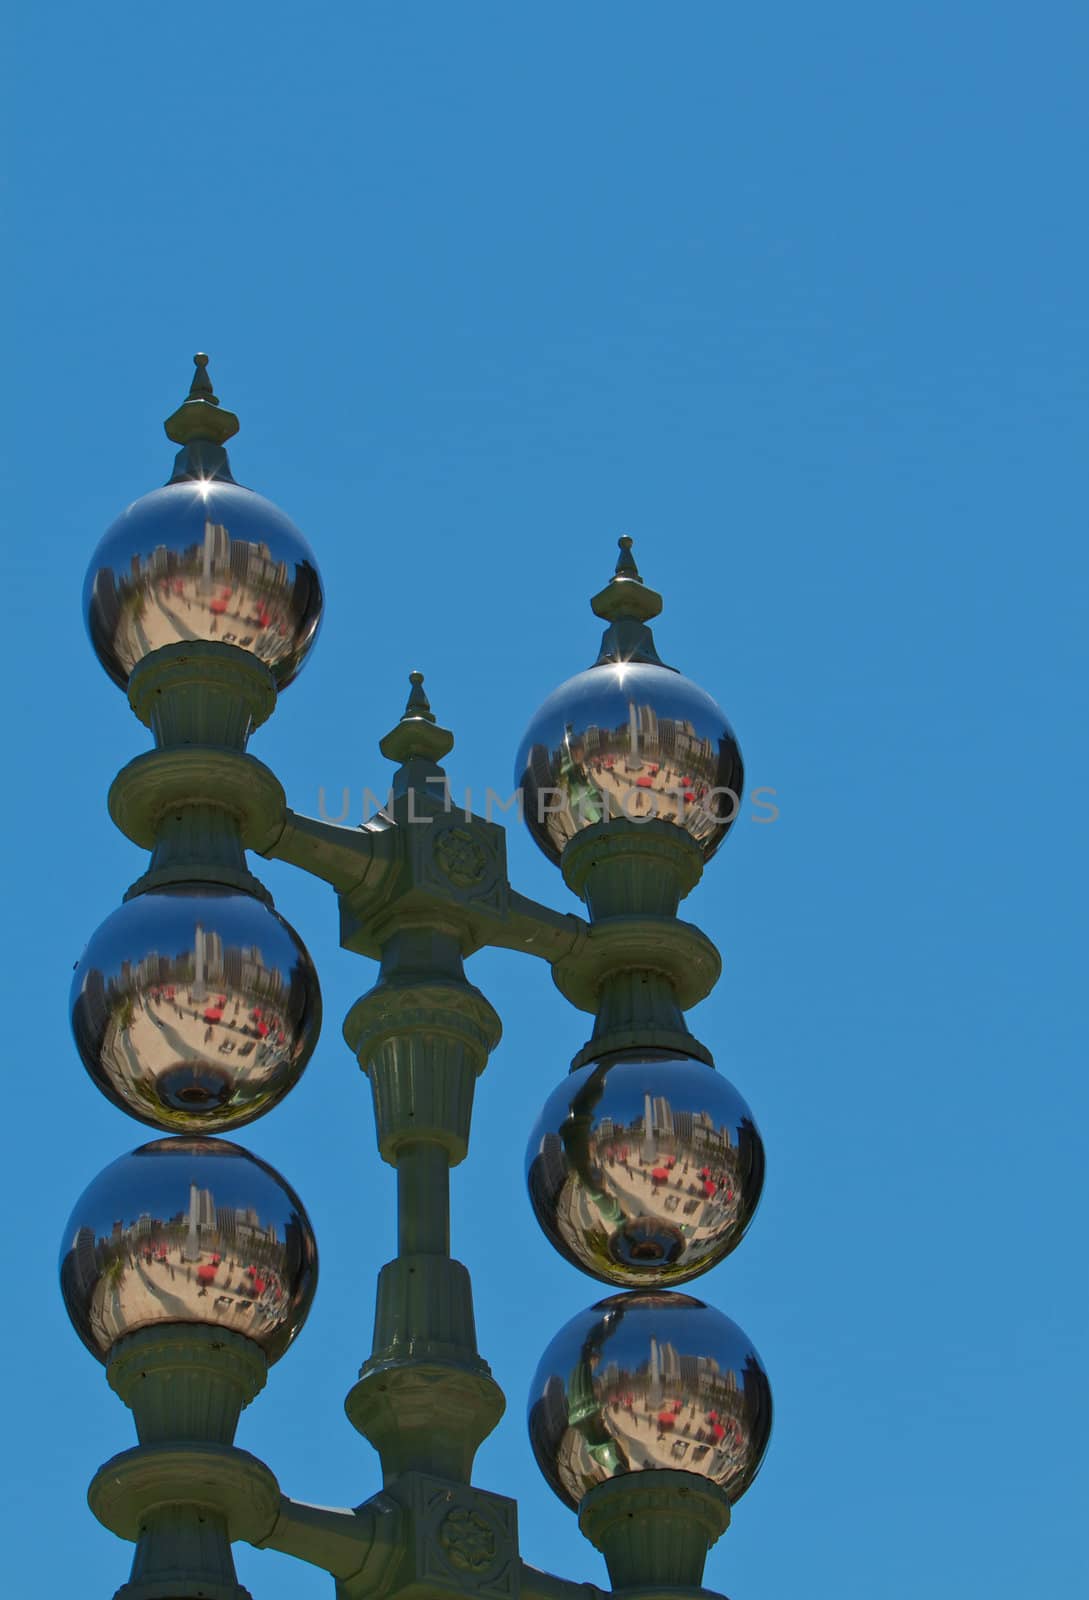 Mirror Ball Lamp Posts by bobkeenan